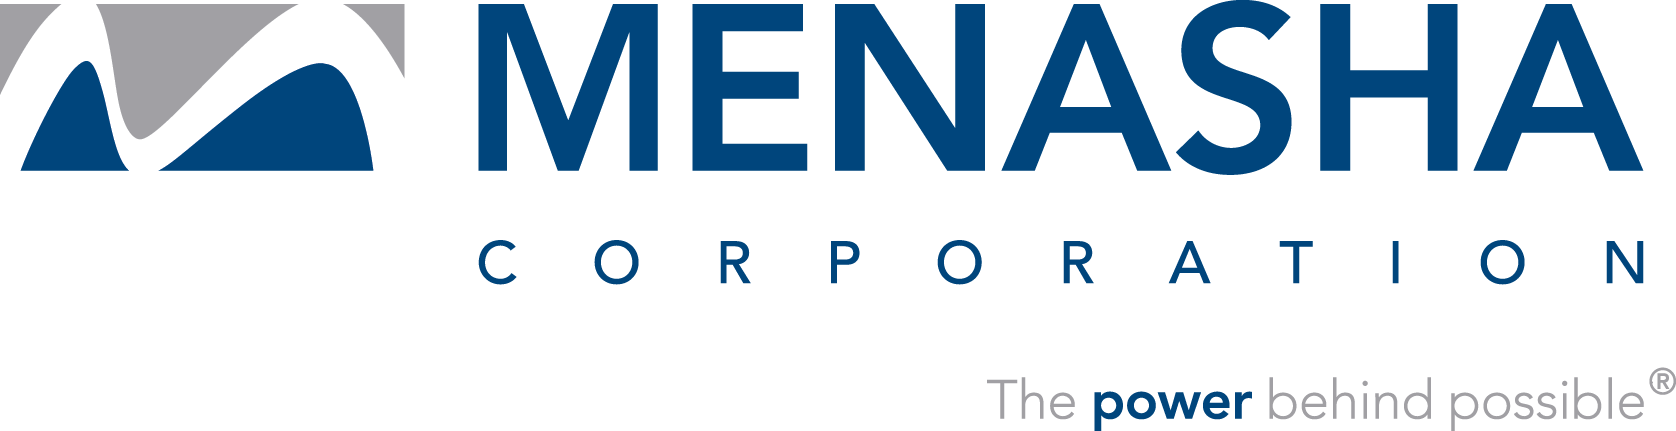 Menasha Corp logo-and-tagline-full color